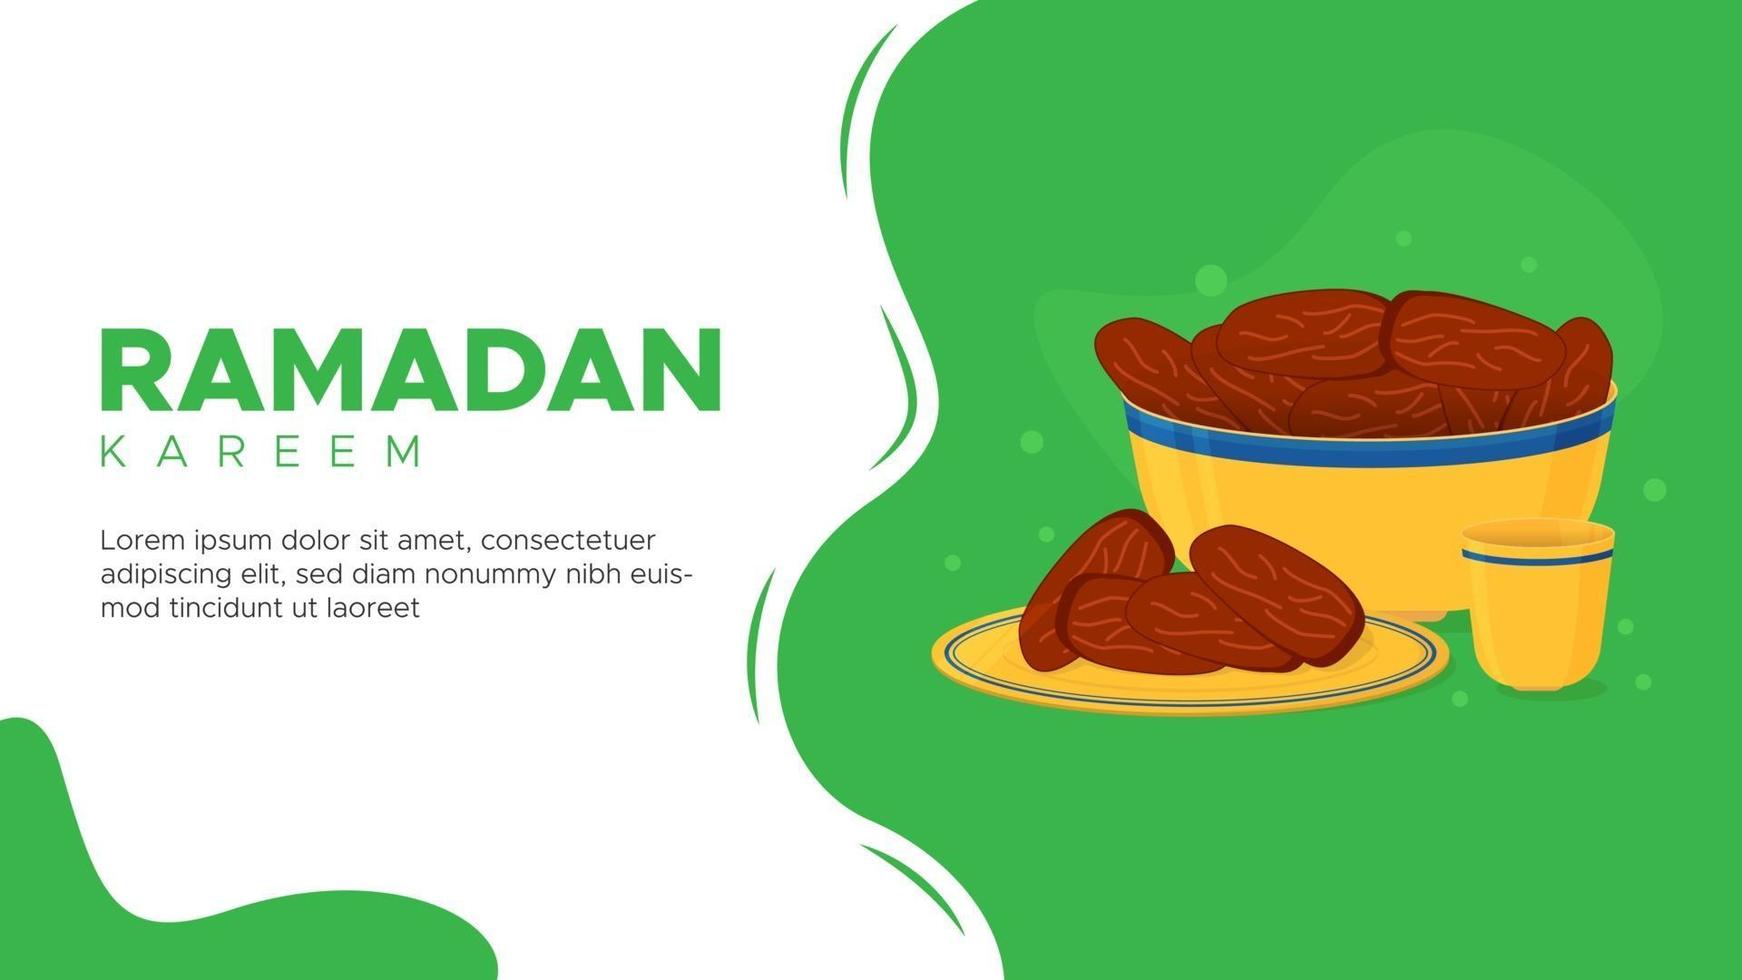 Ramadan Kareem greetings landing page design with dates vector